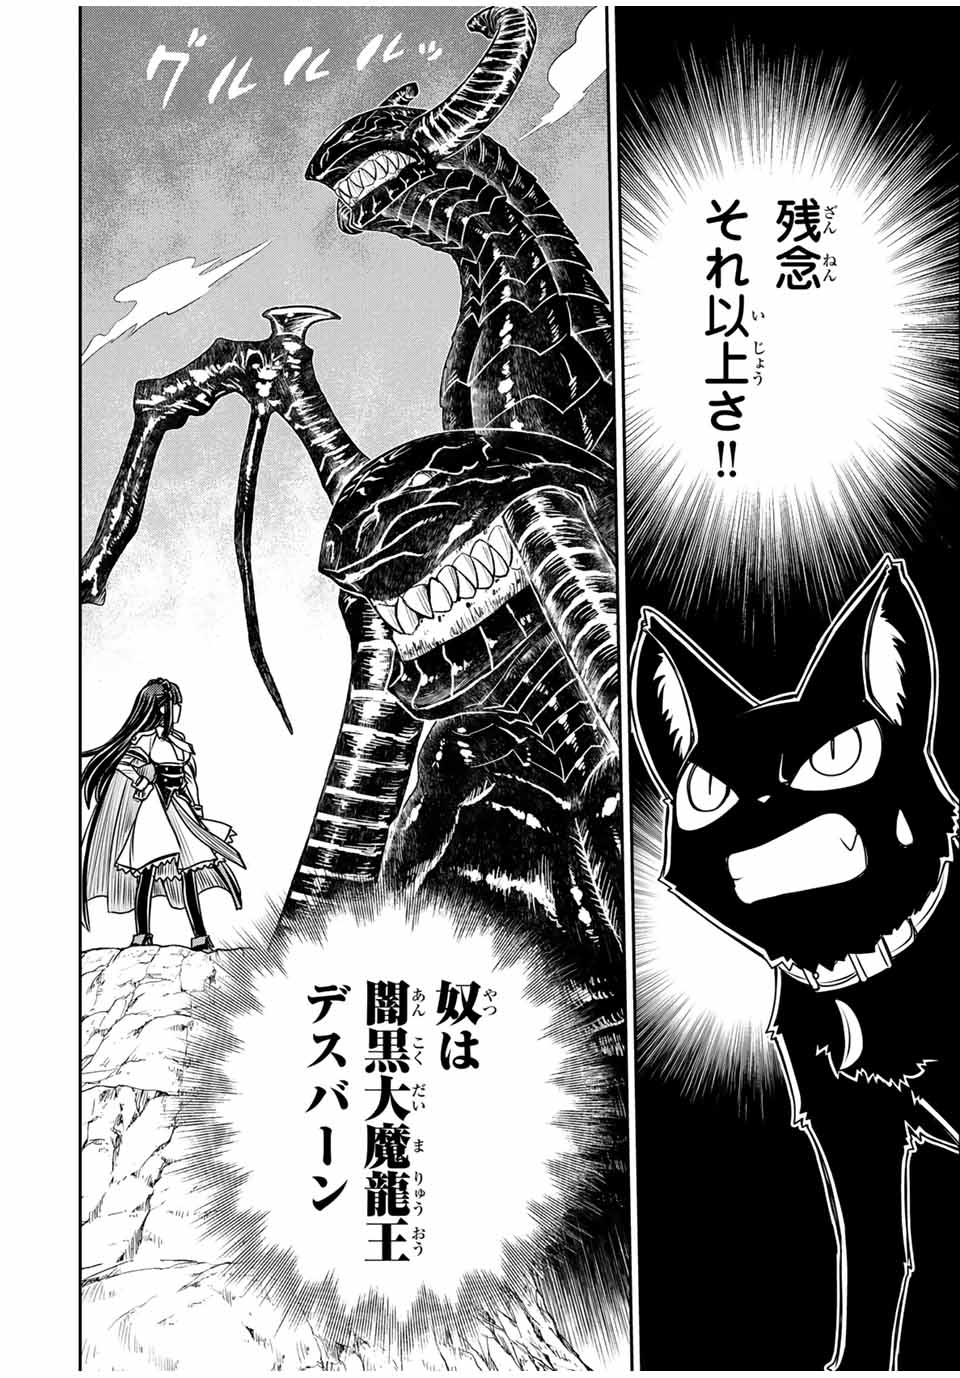 Nengan no Akuyaku Reijou (Last Boss) no Karada wo Teniiretazo!  - Chapter 23 - Page 4